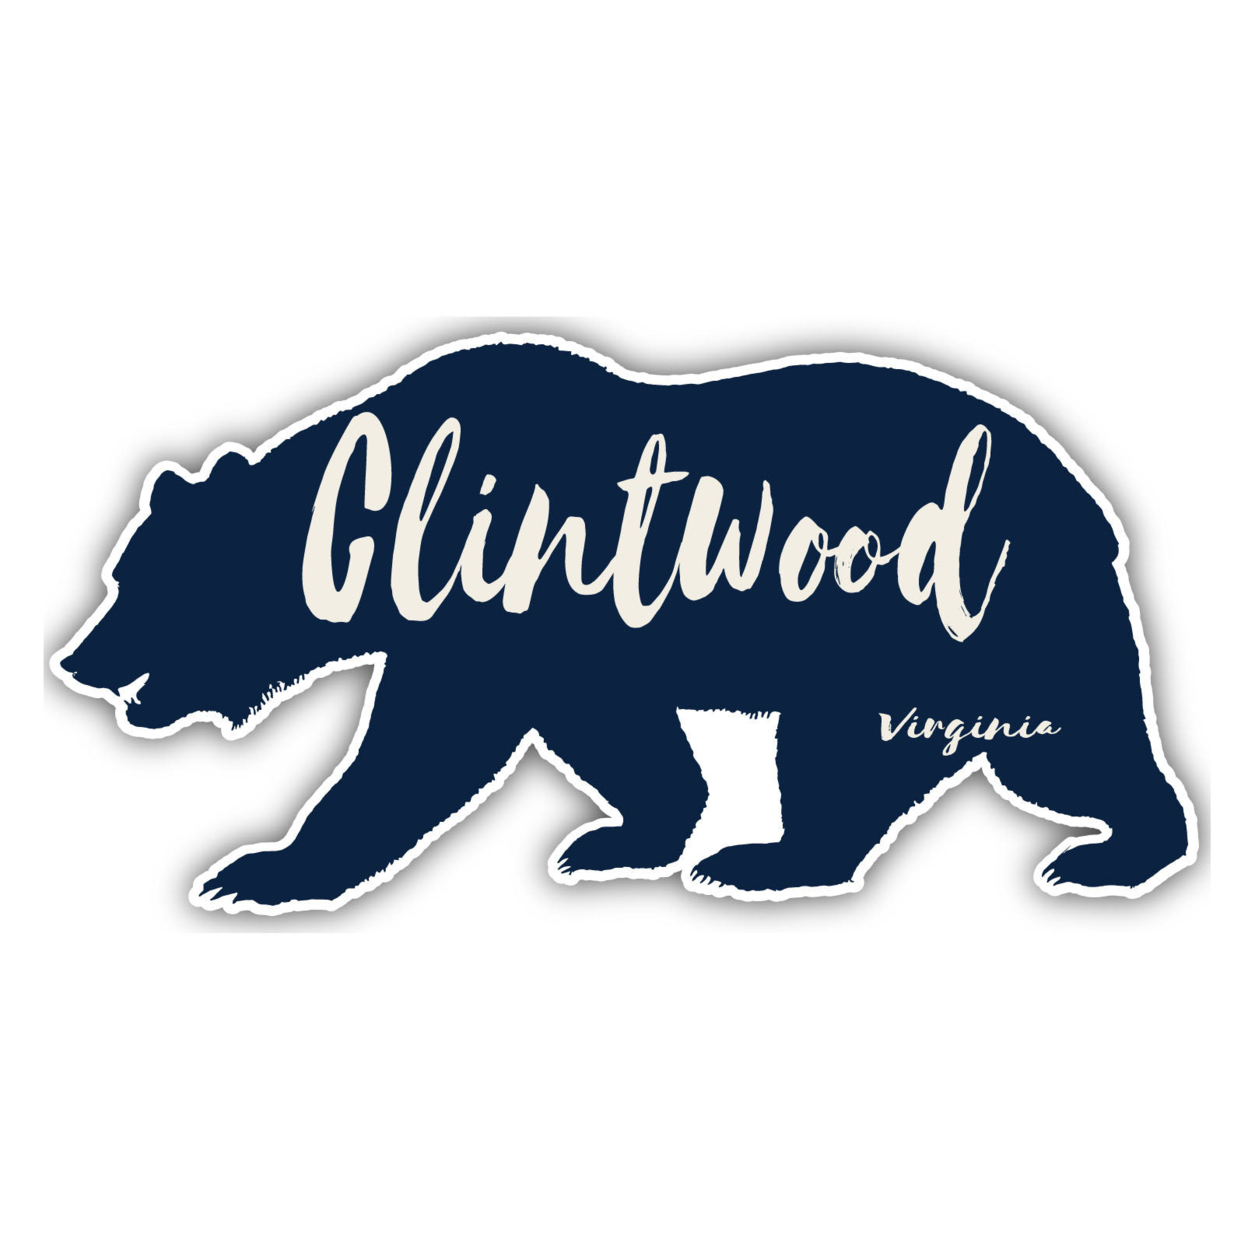 Clintwood Virginia Souvenir Decorative Stickers (Choose Theme And Size) - Single Unit, 8-Inch, Bear